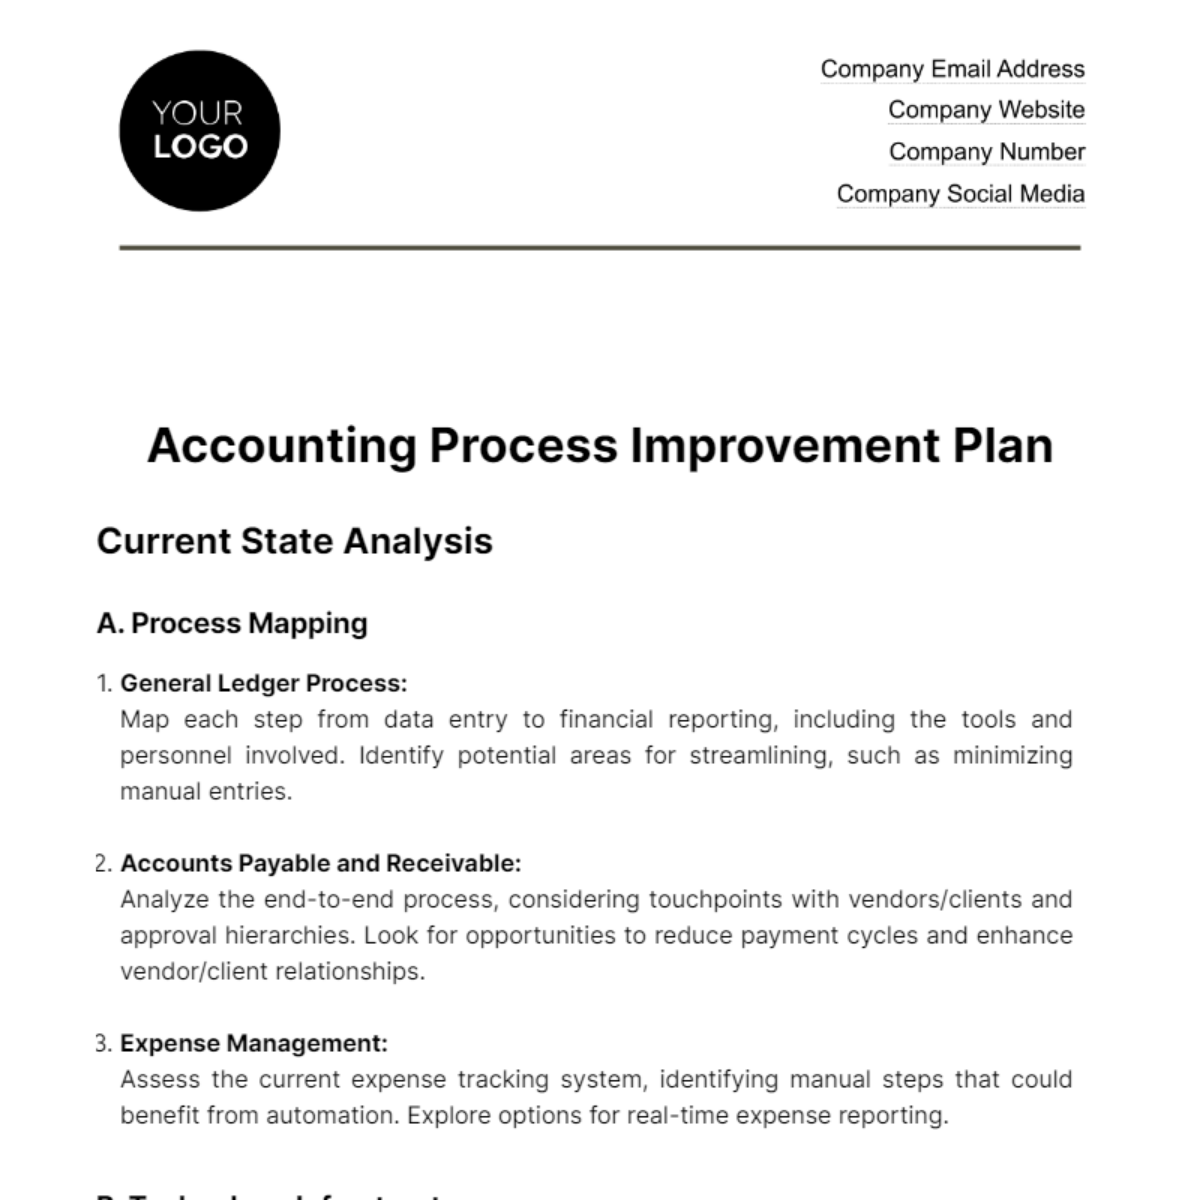 Accounting Process Improvement Plan Template